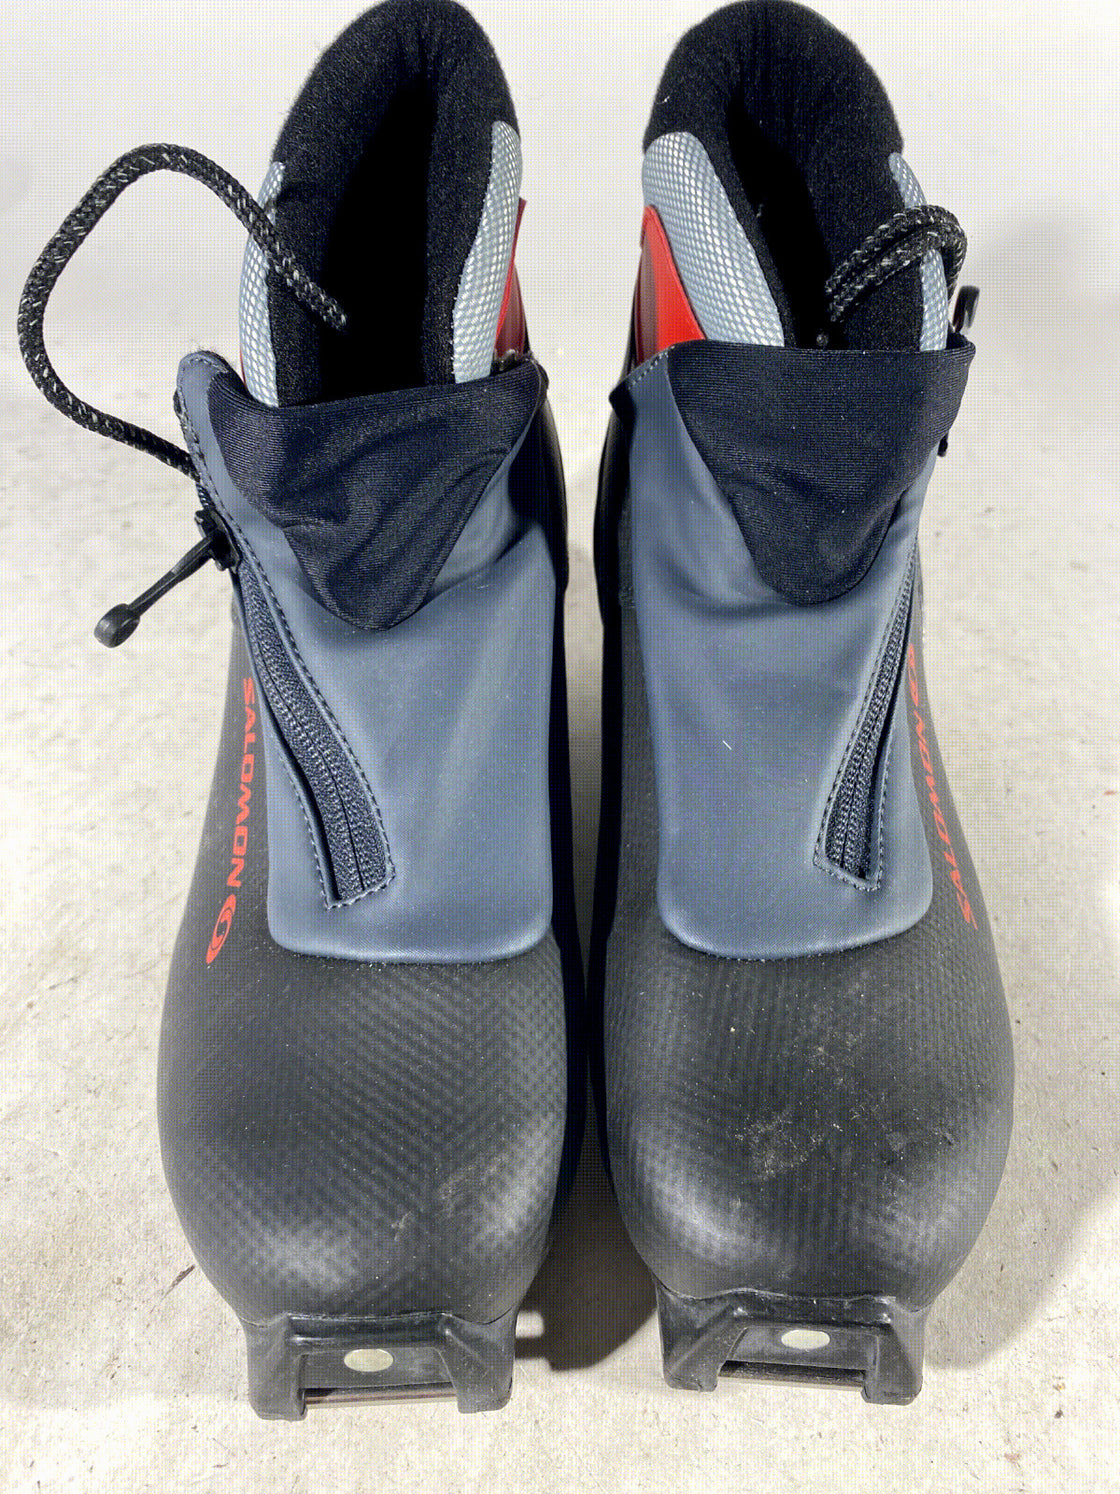 Salomon Classic Cross Country Ski Boots Size EU37 1/3 US5 for SNS Profil